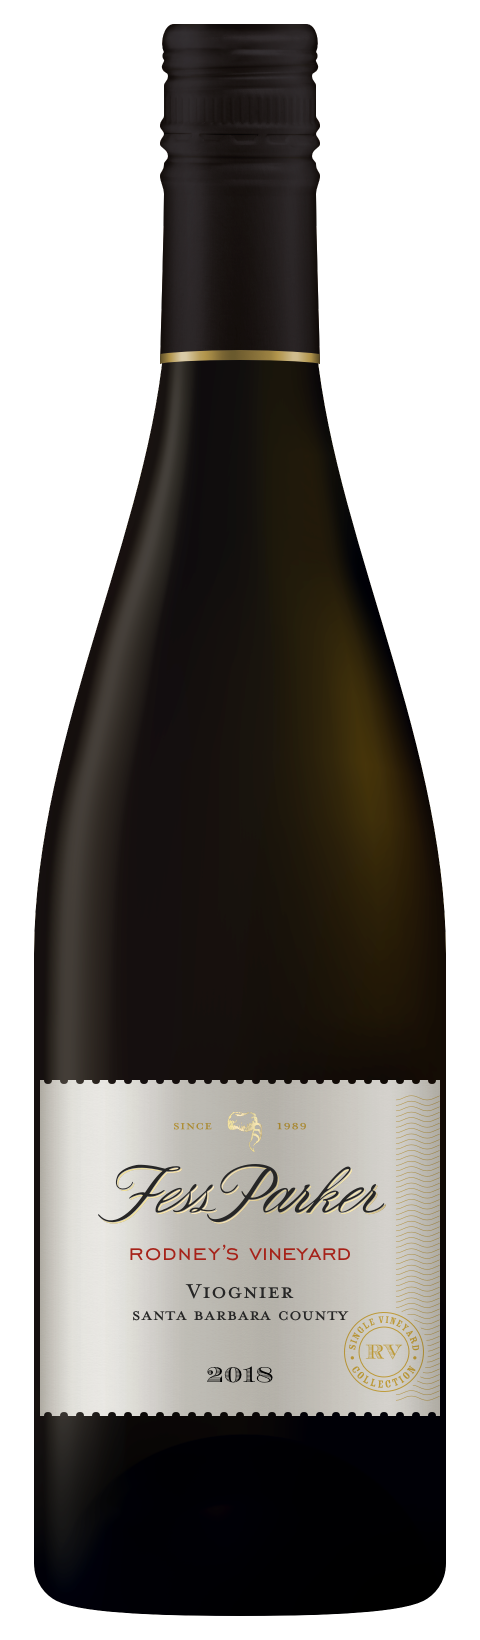 Bottle shot of Rodney's Vineyard Viognier